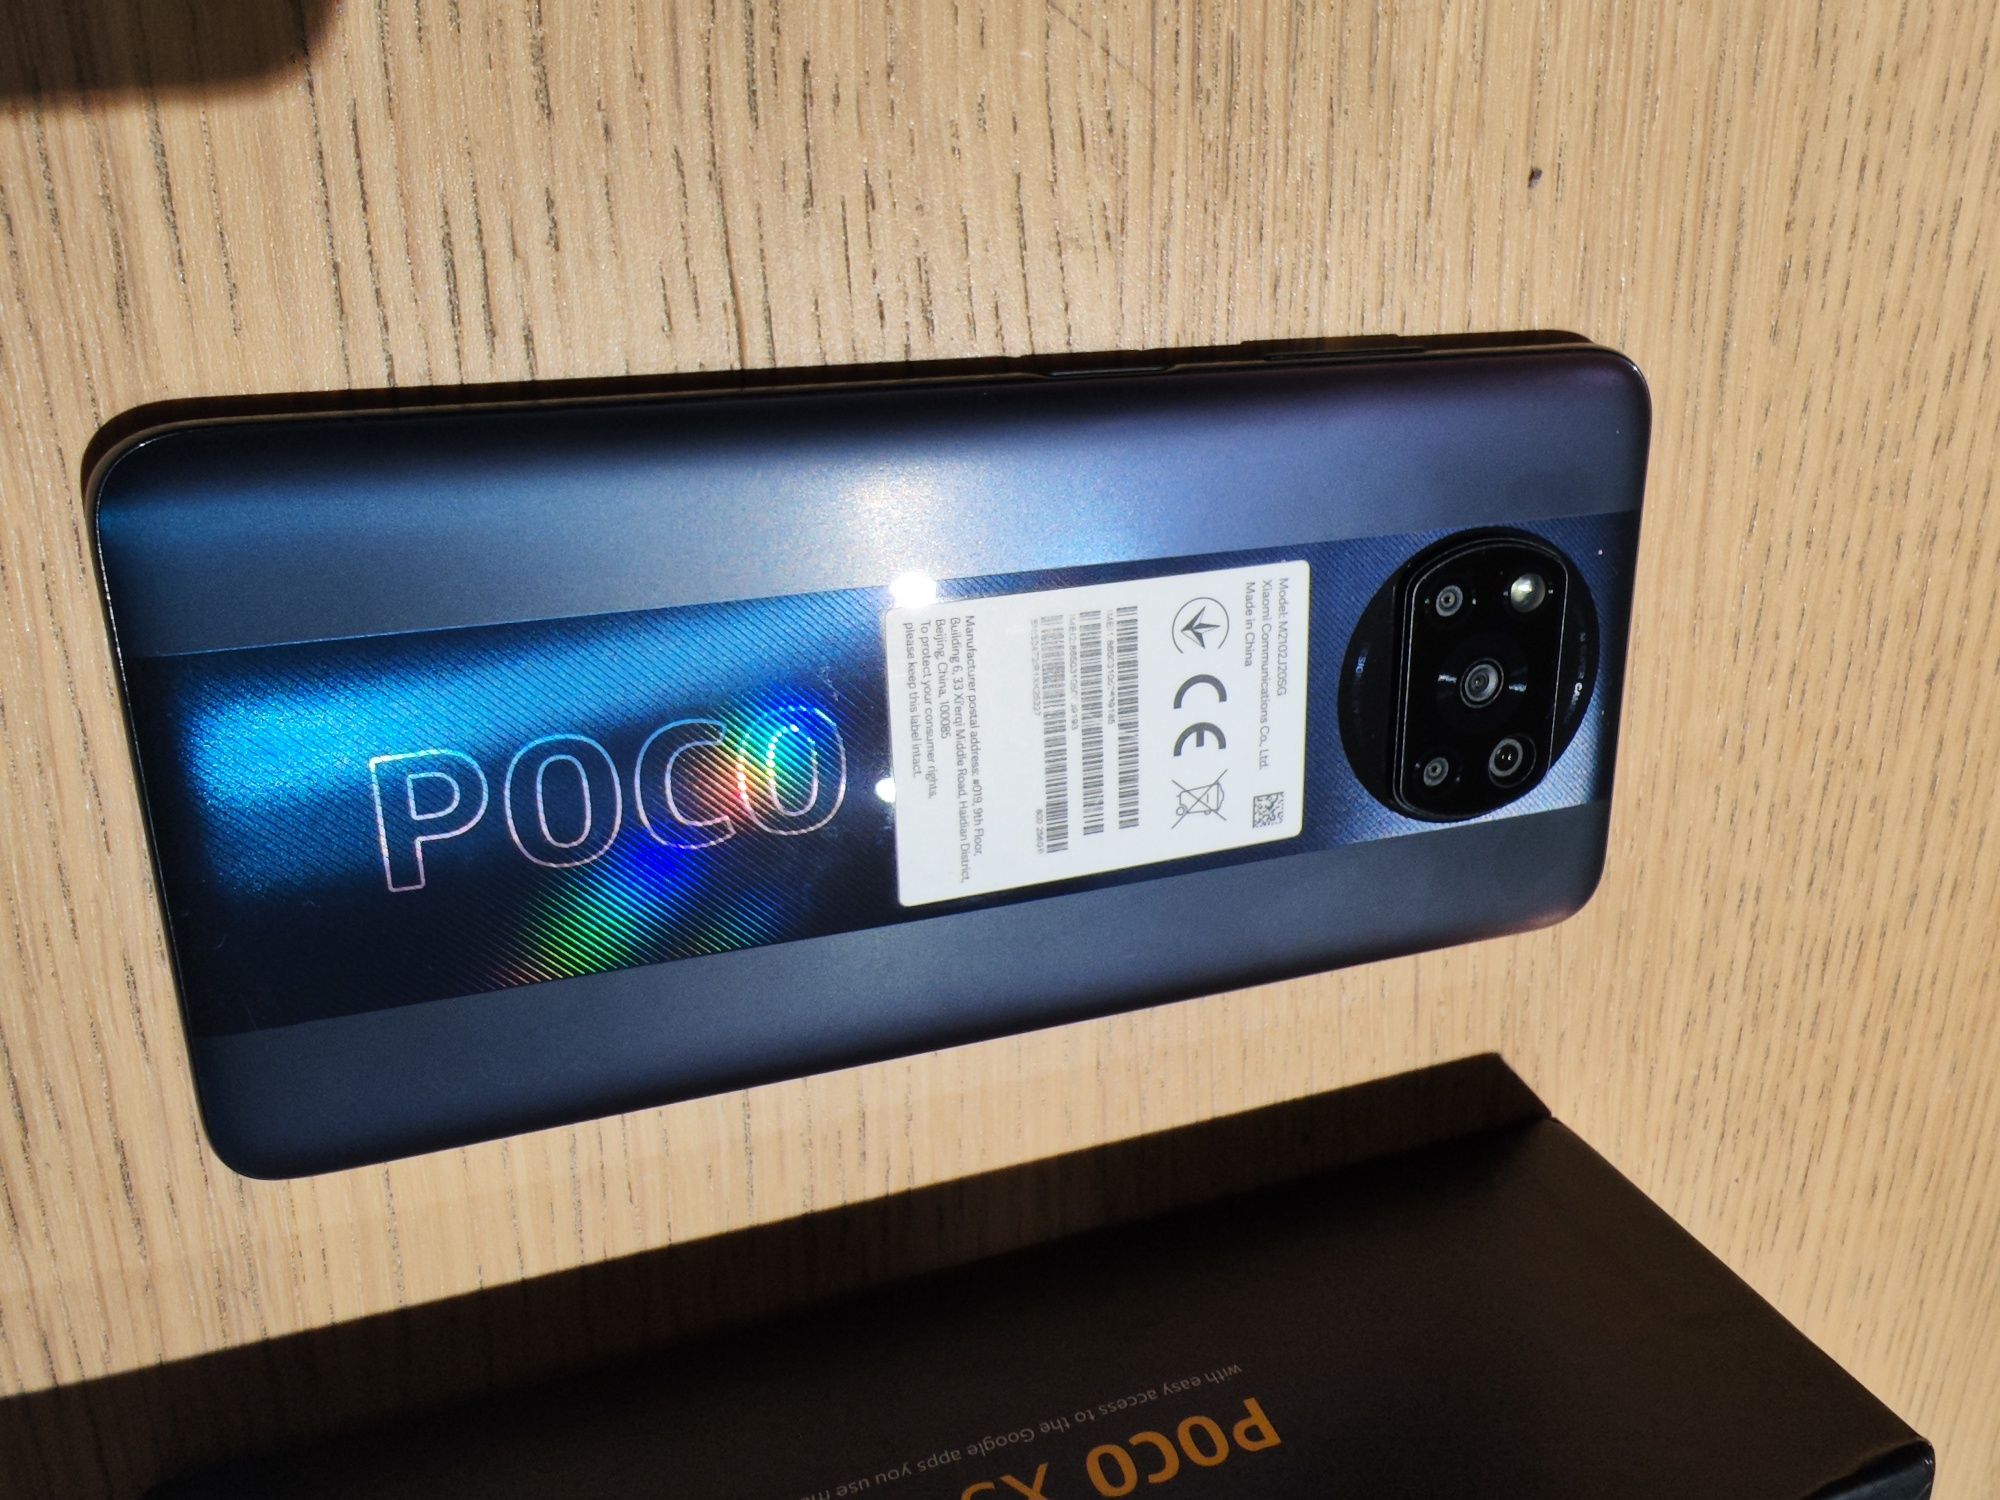 Smartphone POCO X3 pro (6.67" 8GB x 256GB)